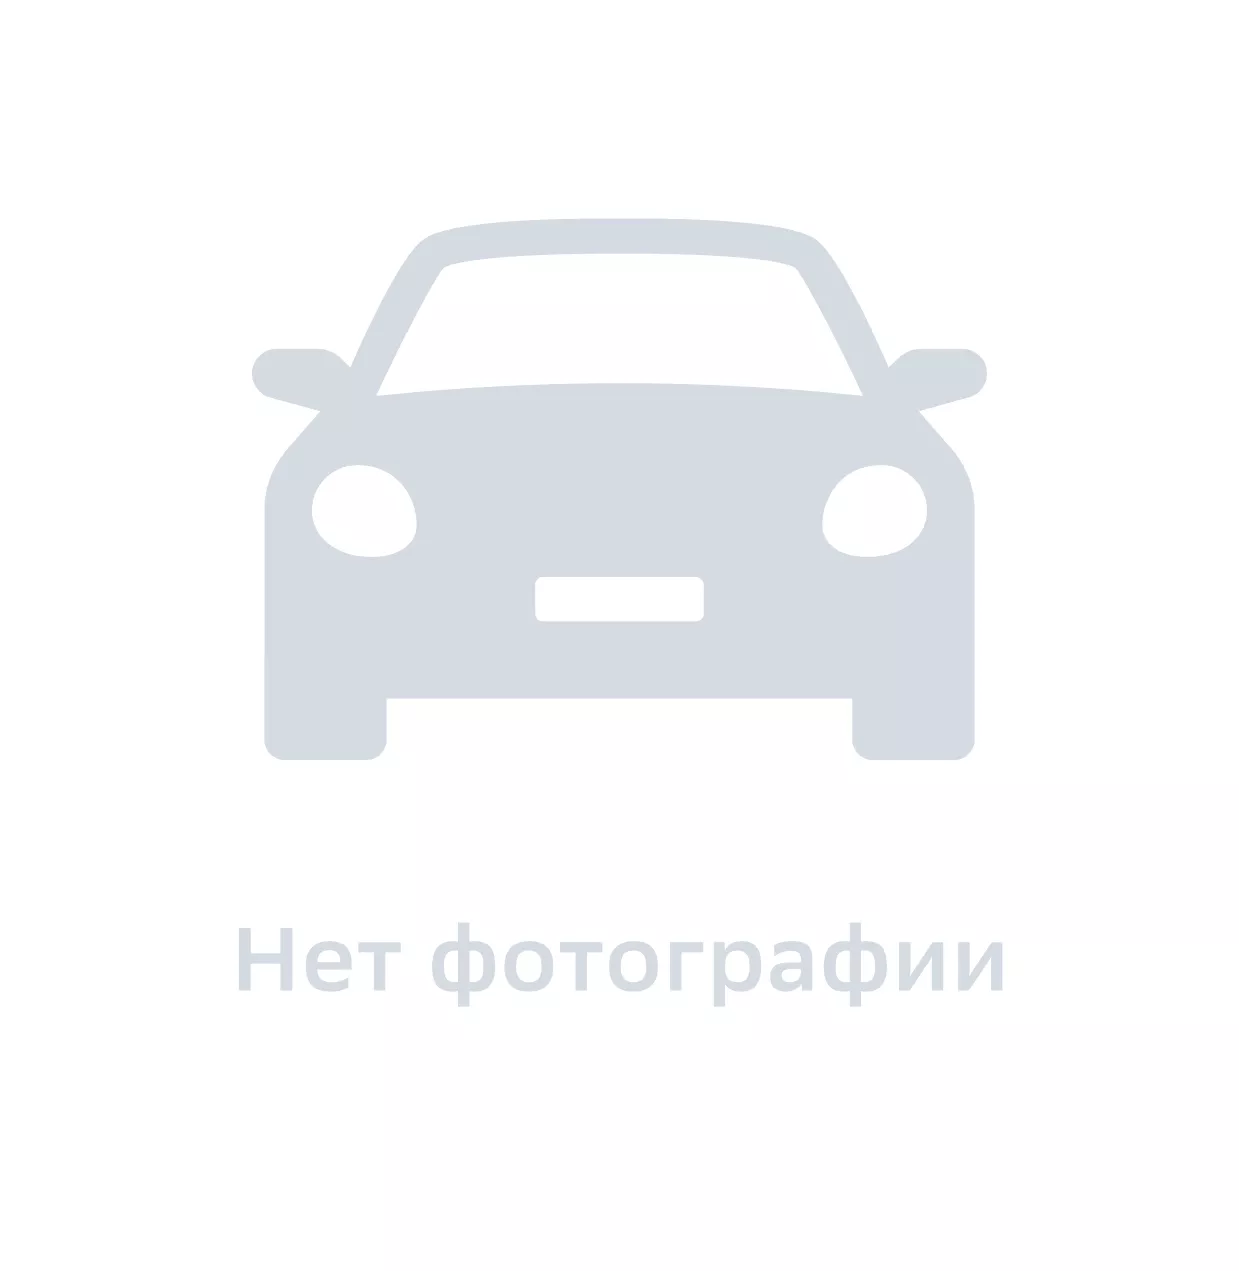 Кулак левый, Hyundai-KIA, арт. 517154D000, цена за 1 шт.